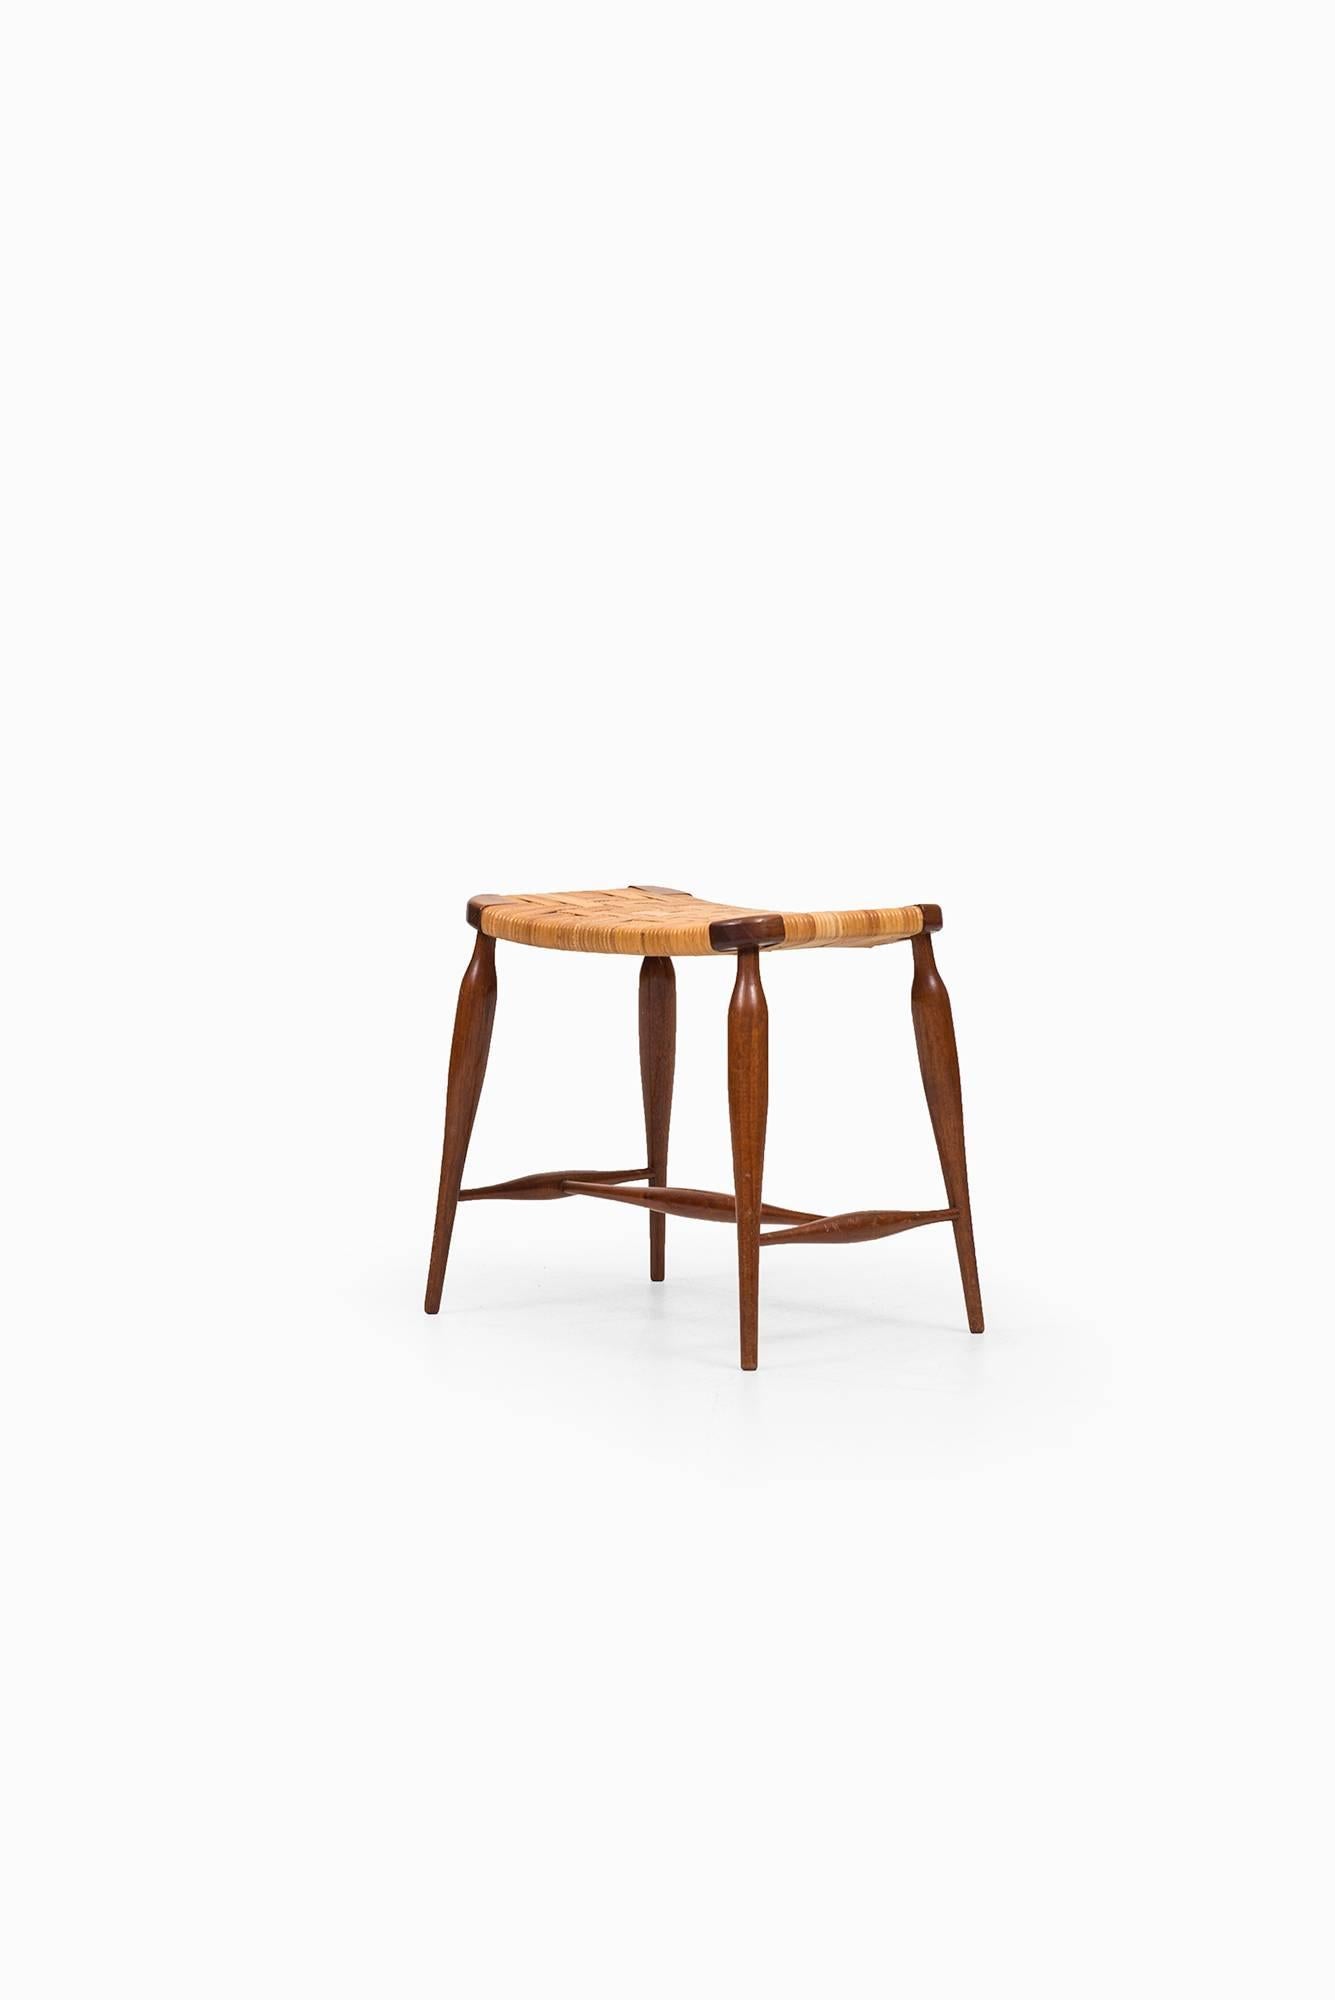 Rare stool model 967 designed by Josef Frank. Produced by Svenskt Tenn in Sweden.